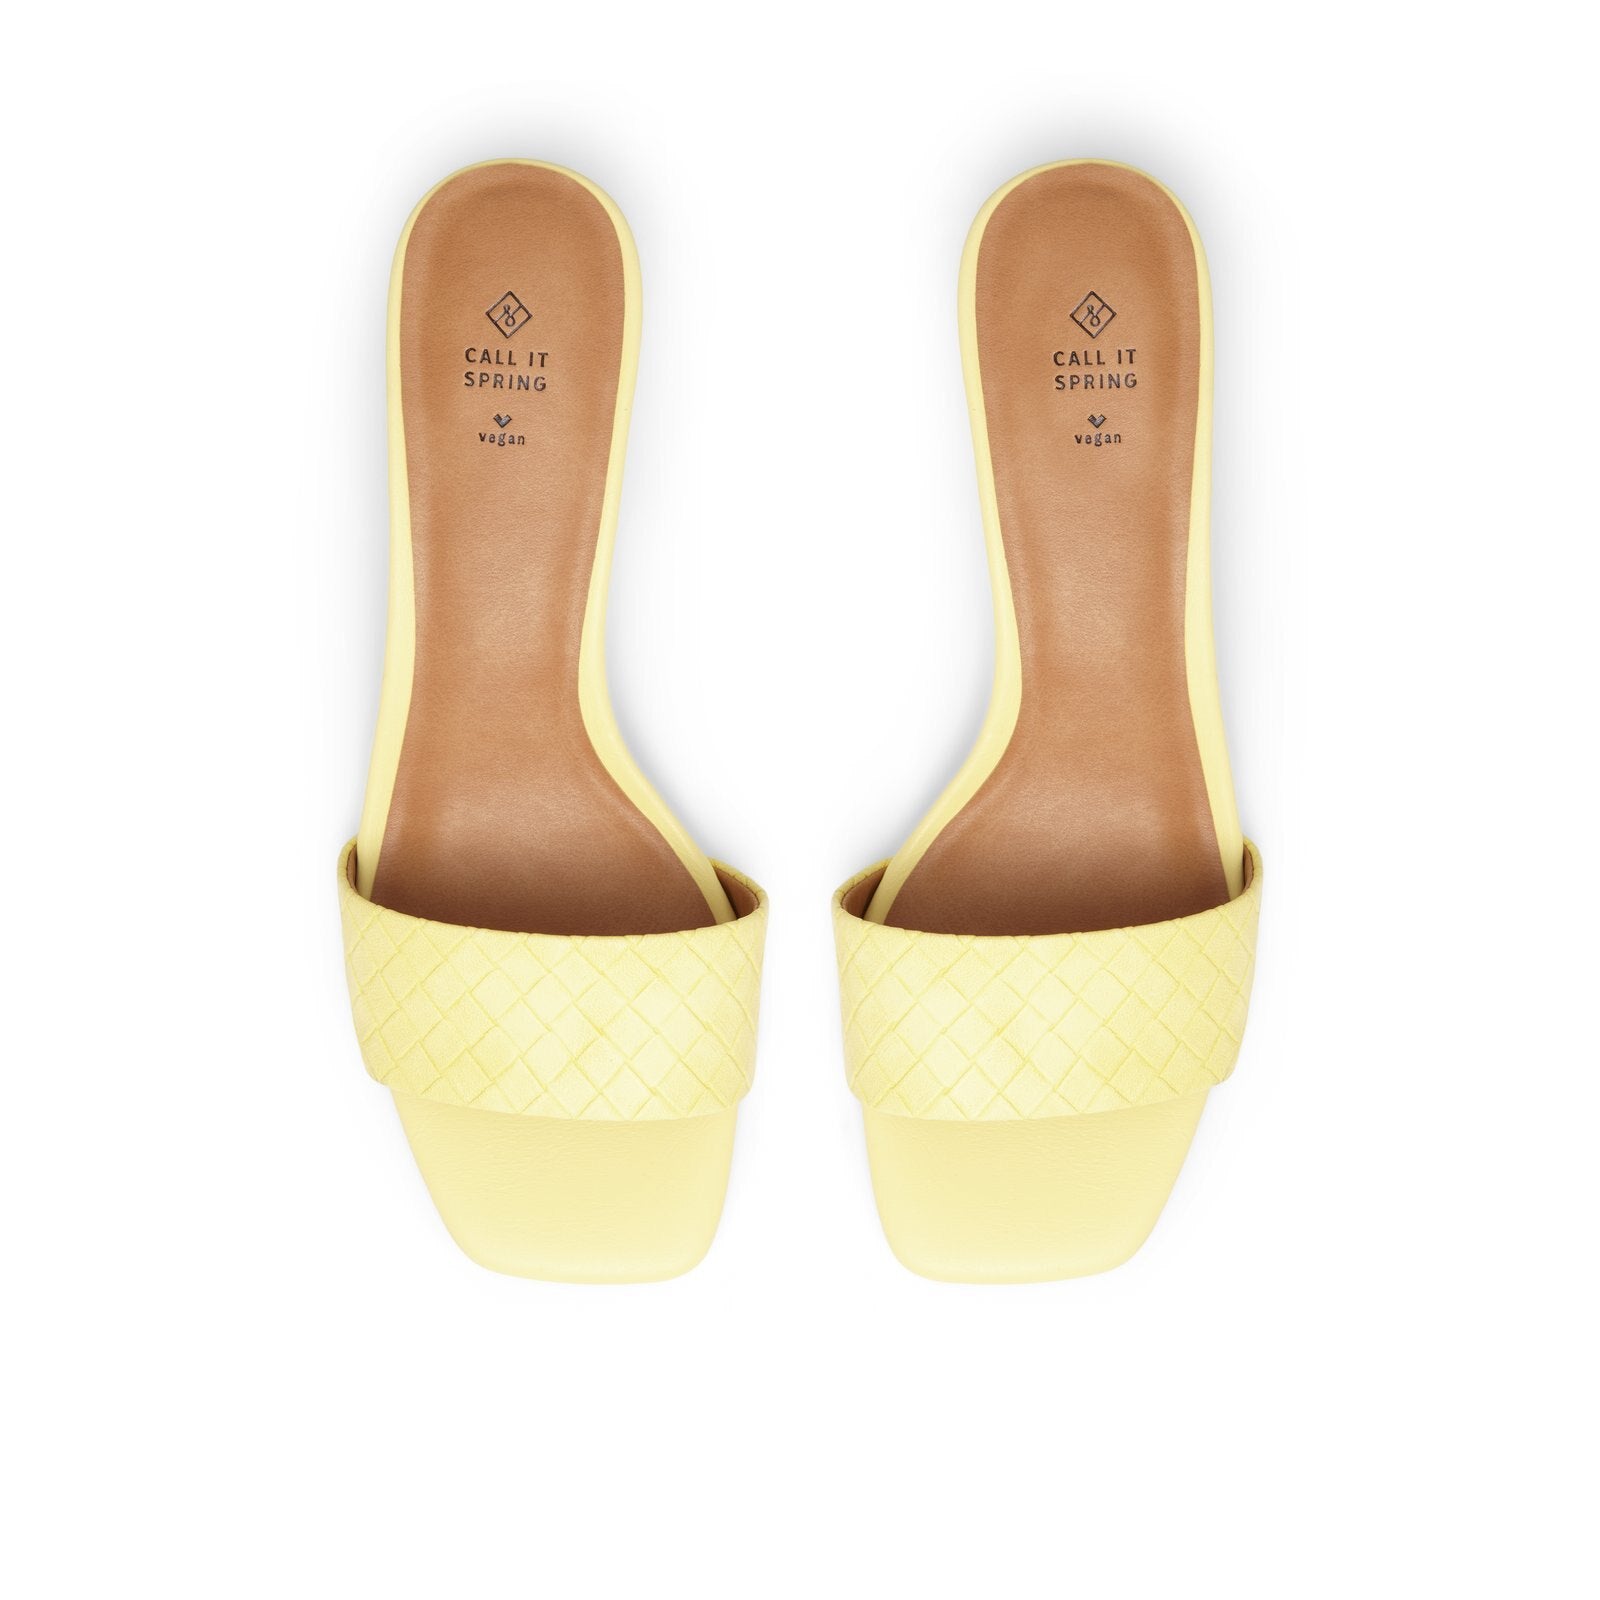 AABELLA Women Shoes - LIGHT YELLOW - CALL IT SPRING KSA